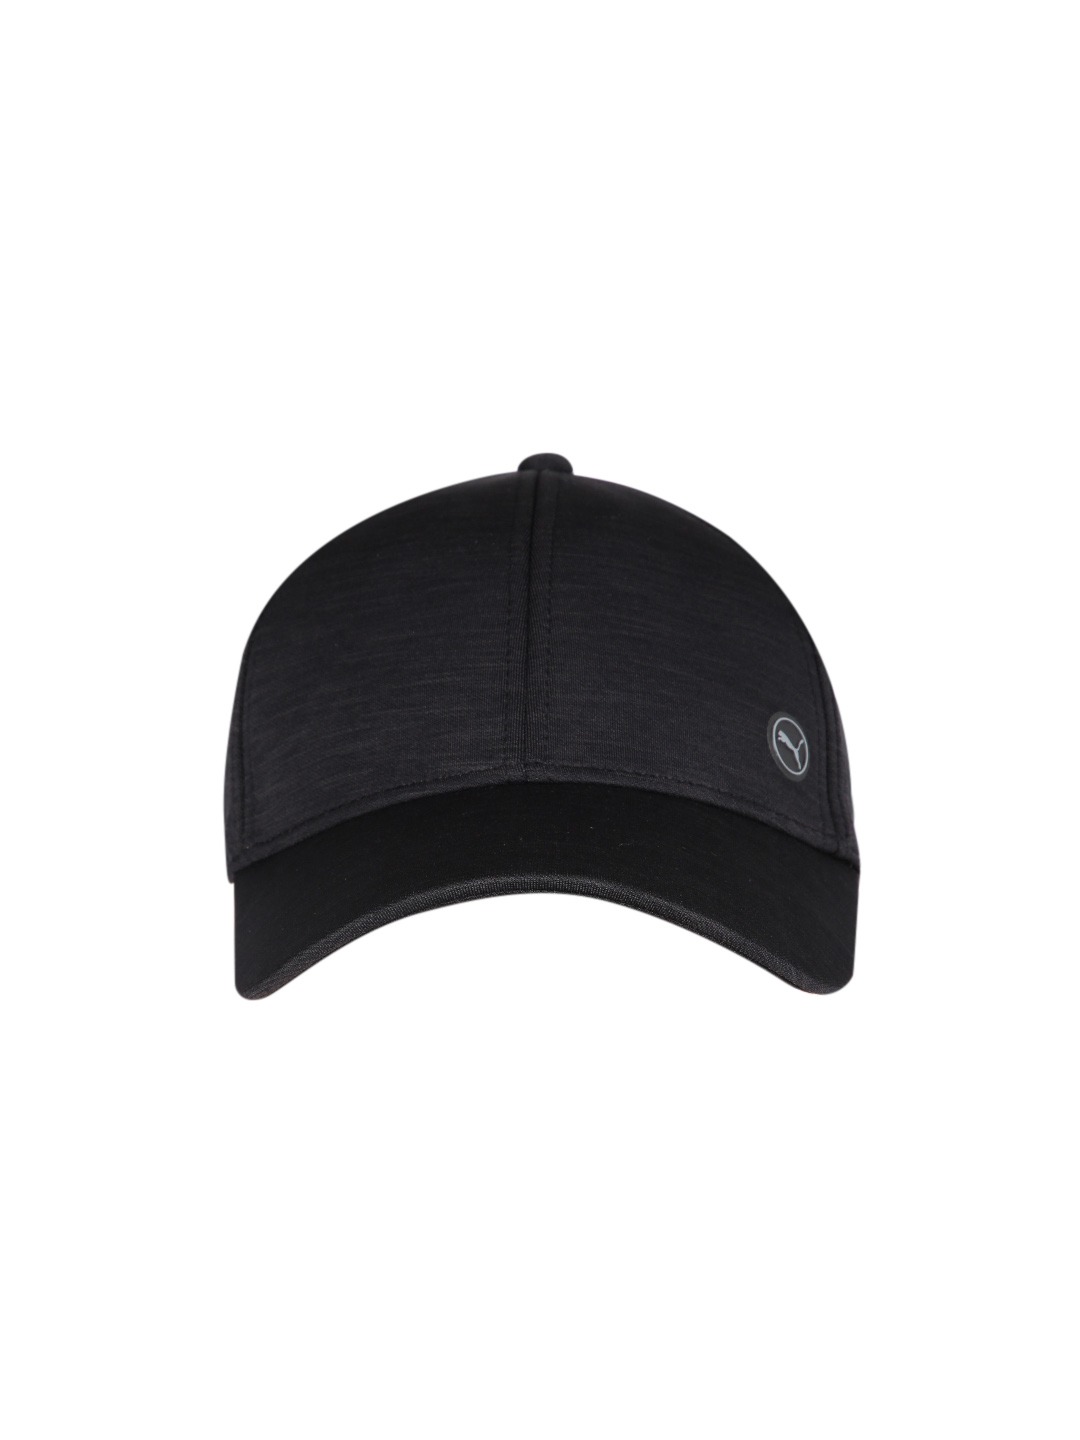 Accessories Caps | Puma Women Black Baseball Cap - YF92636